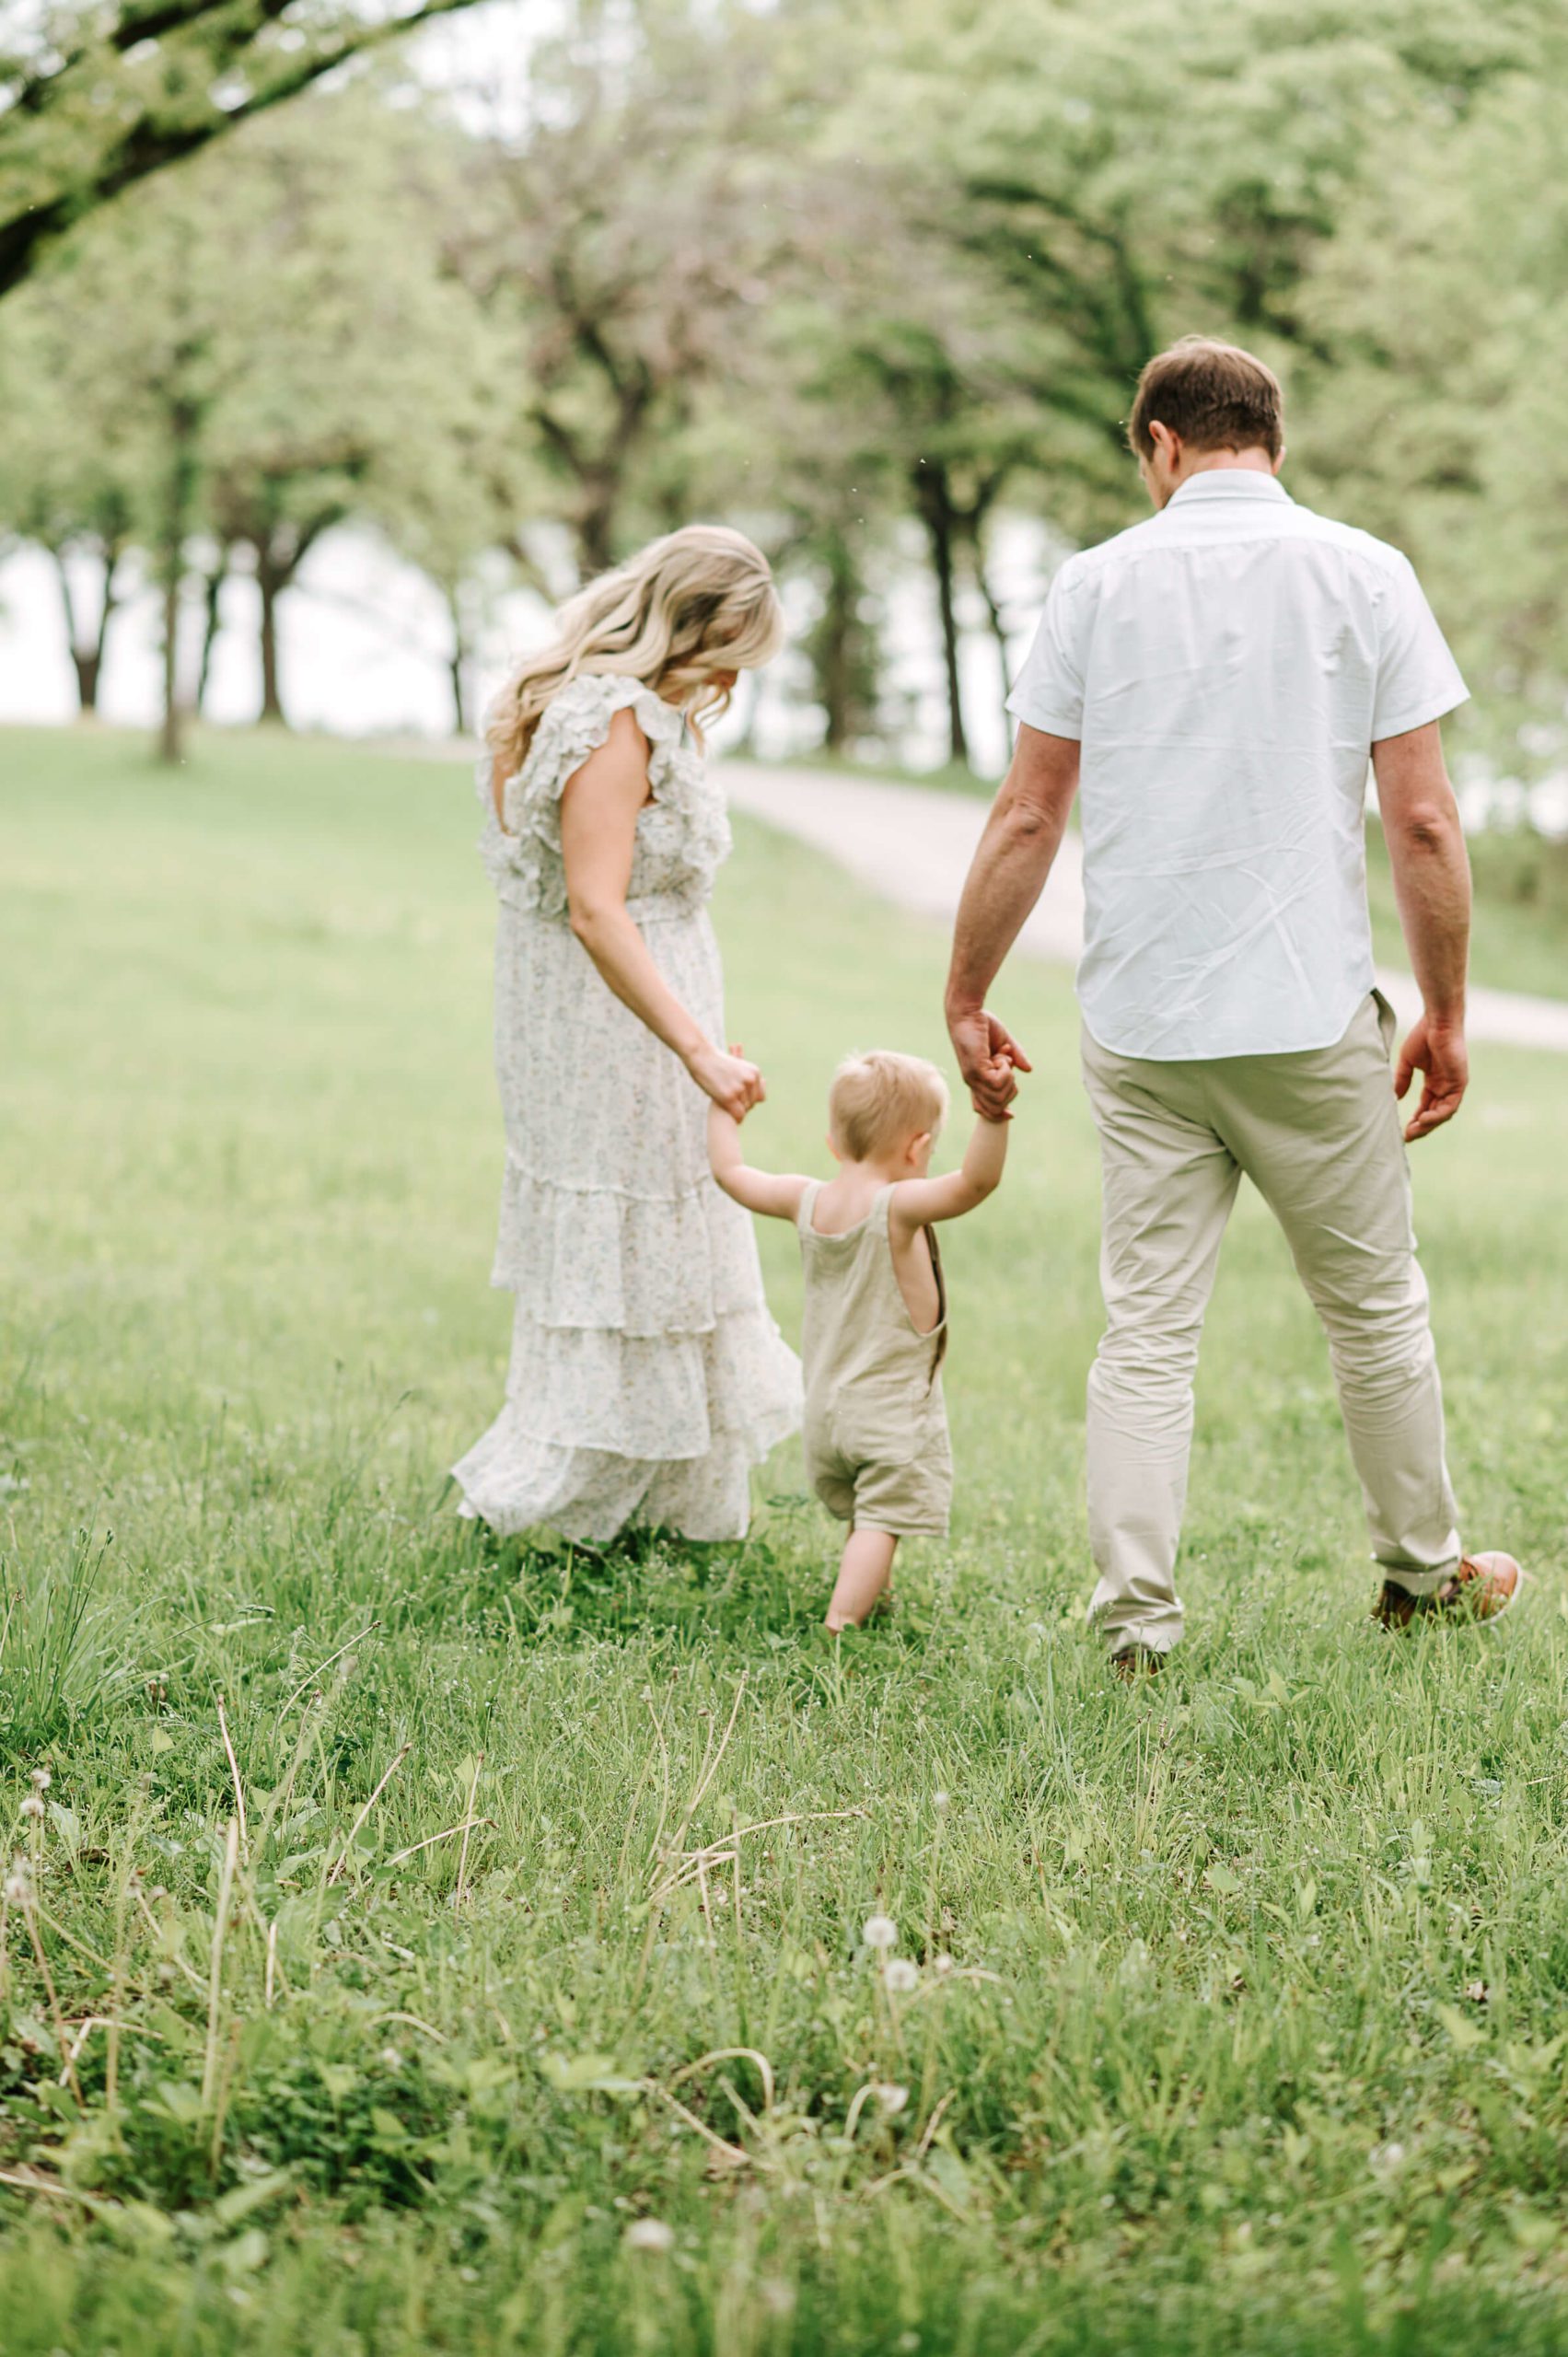 Family holding hands walking across grassy field